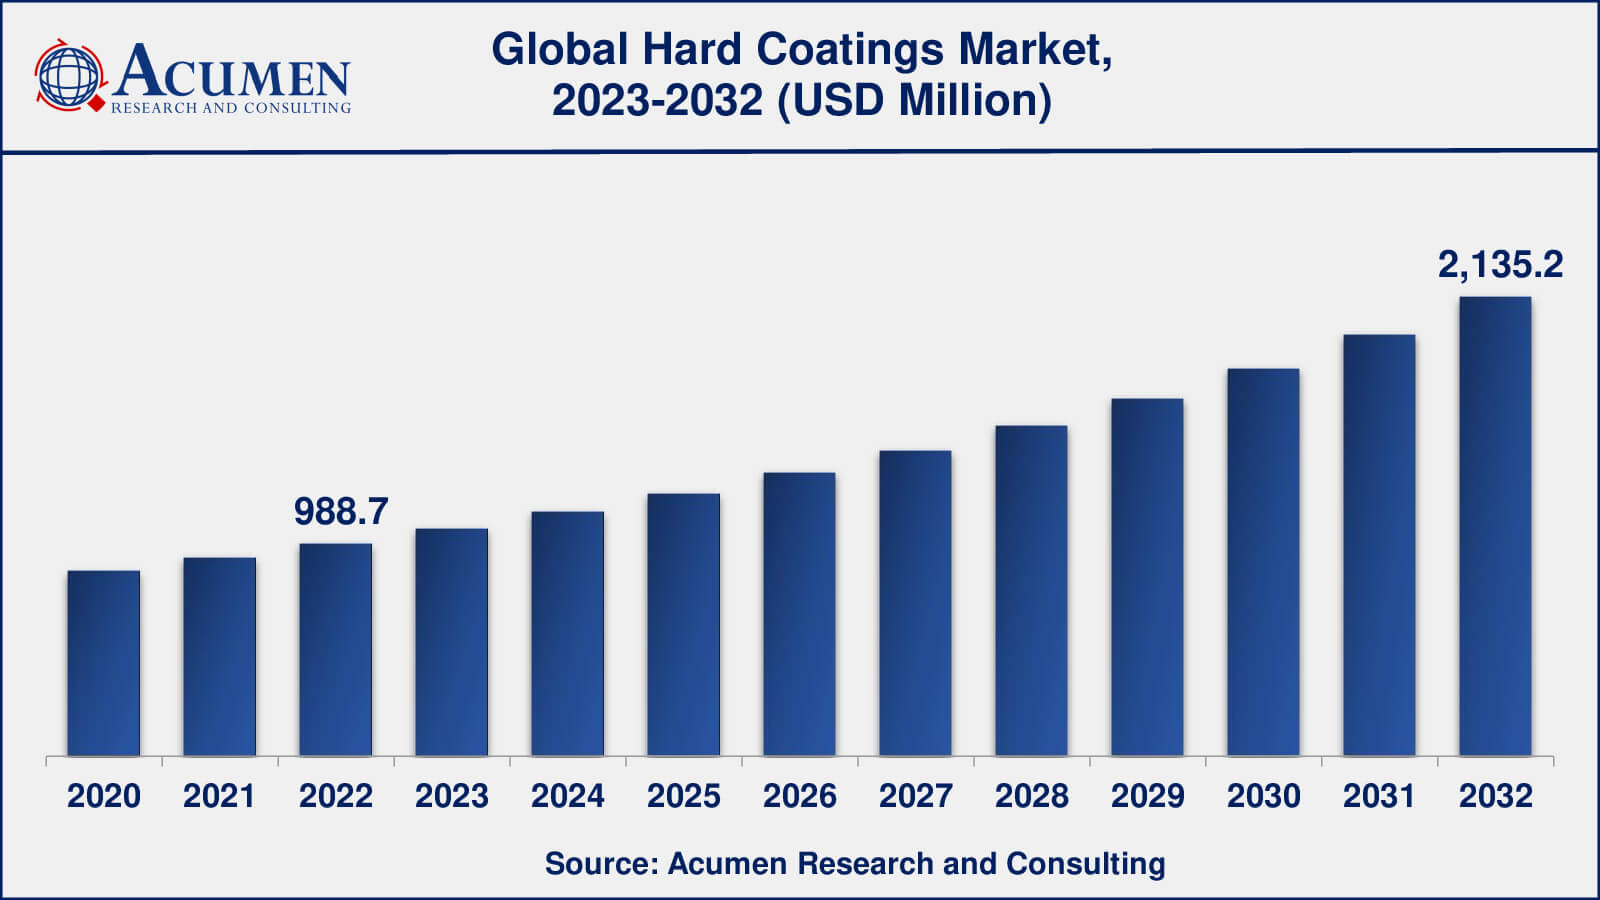 Global Hard Coatings Market Dynamics